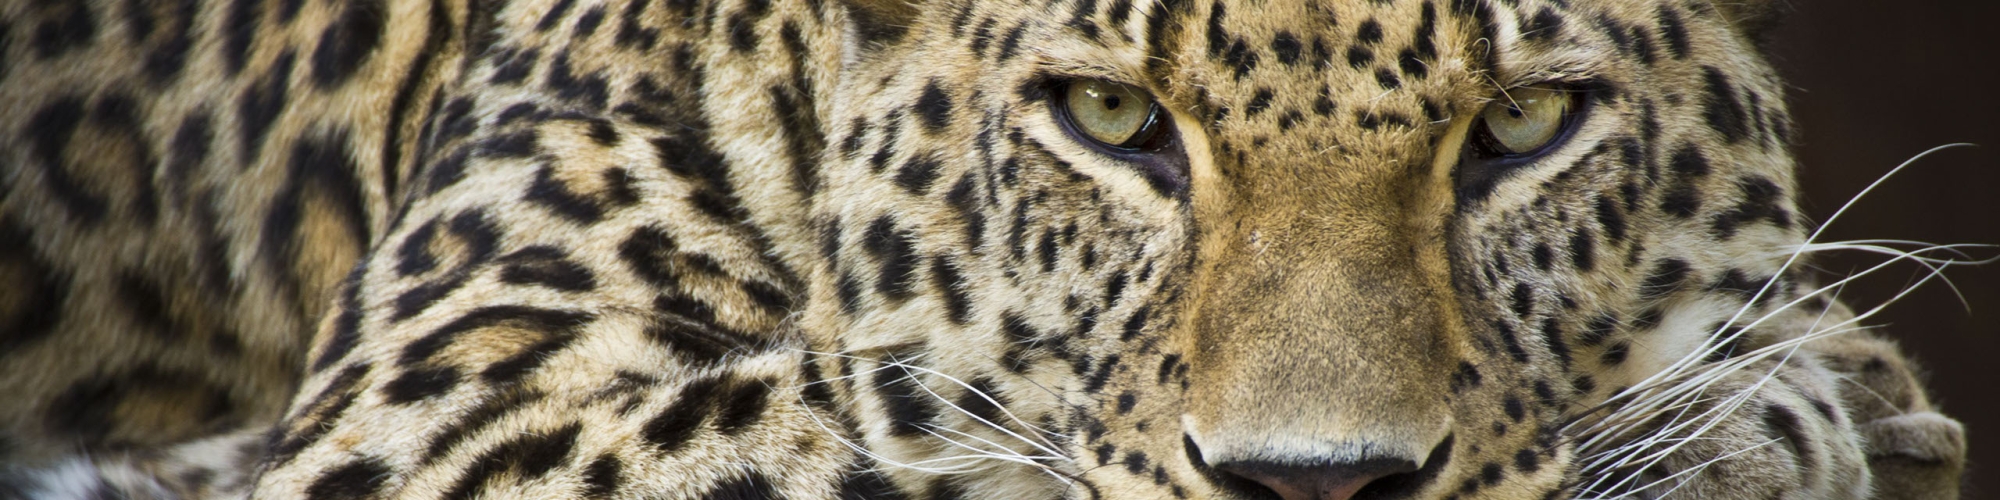 leopard-08